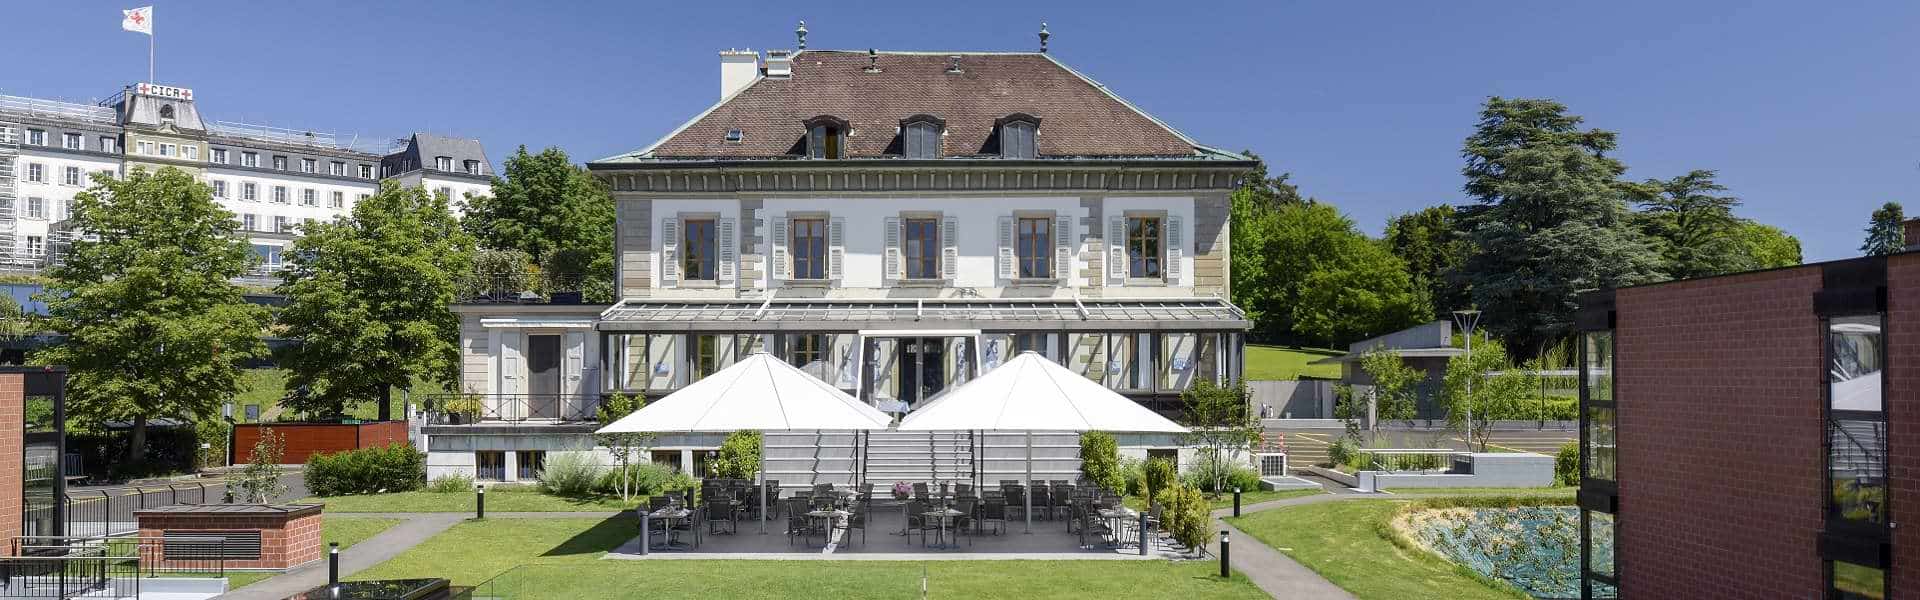 Hotel Management School of Geneva | Gallery Photos